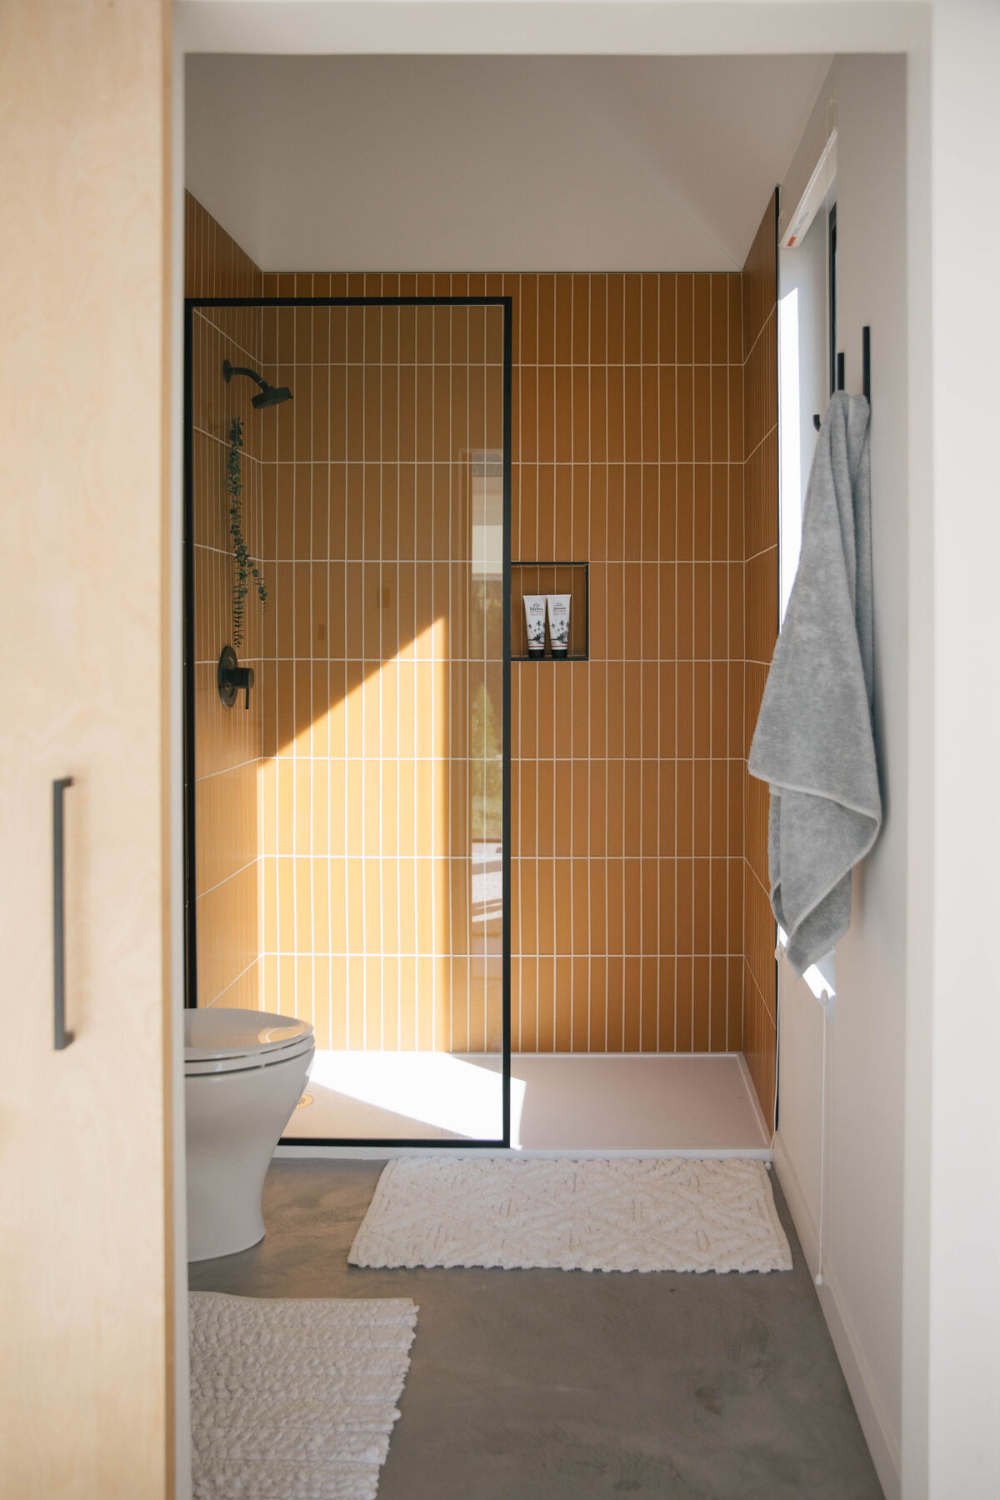 Bathroom Tile Designs : Pictures, Ideas